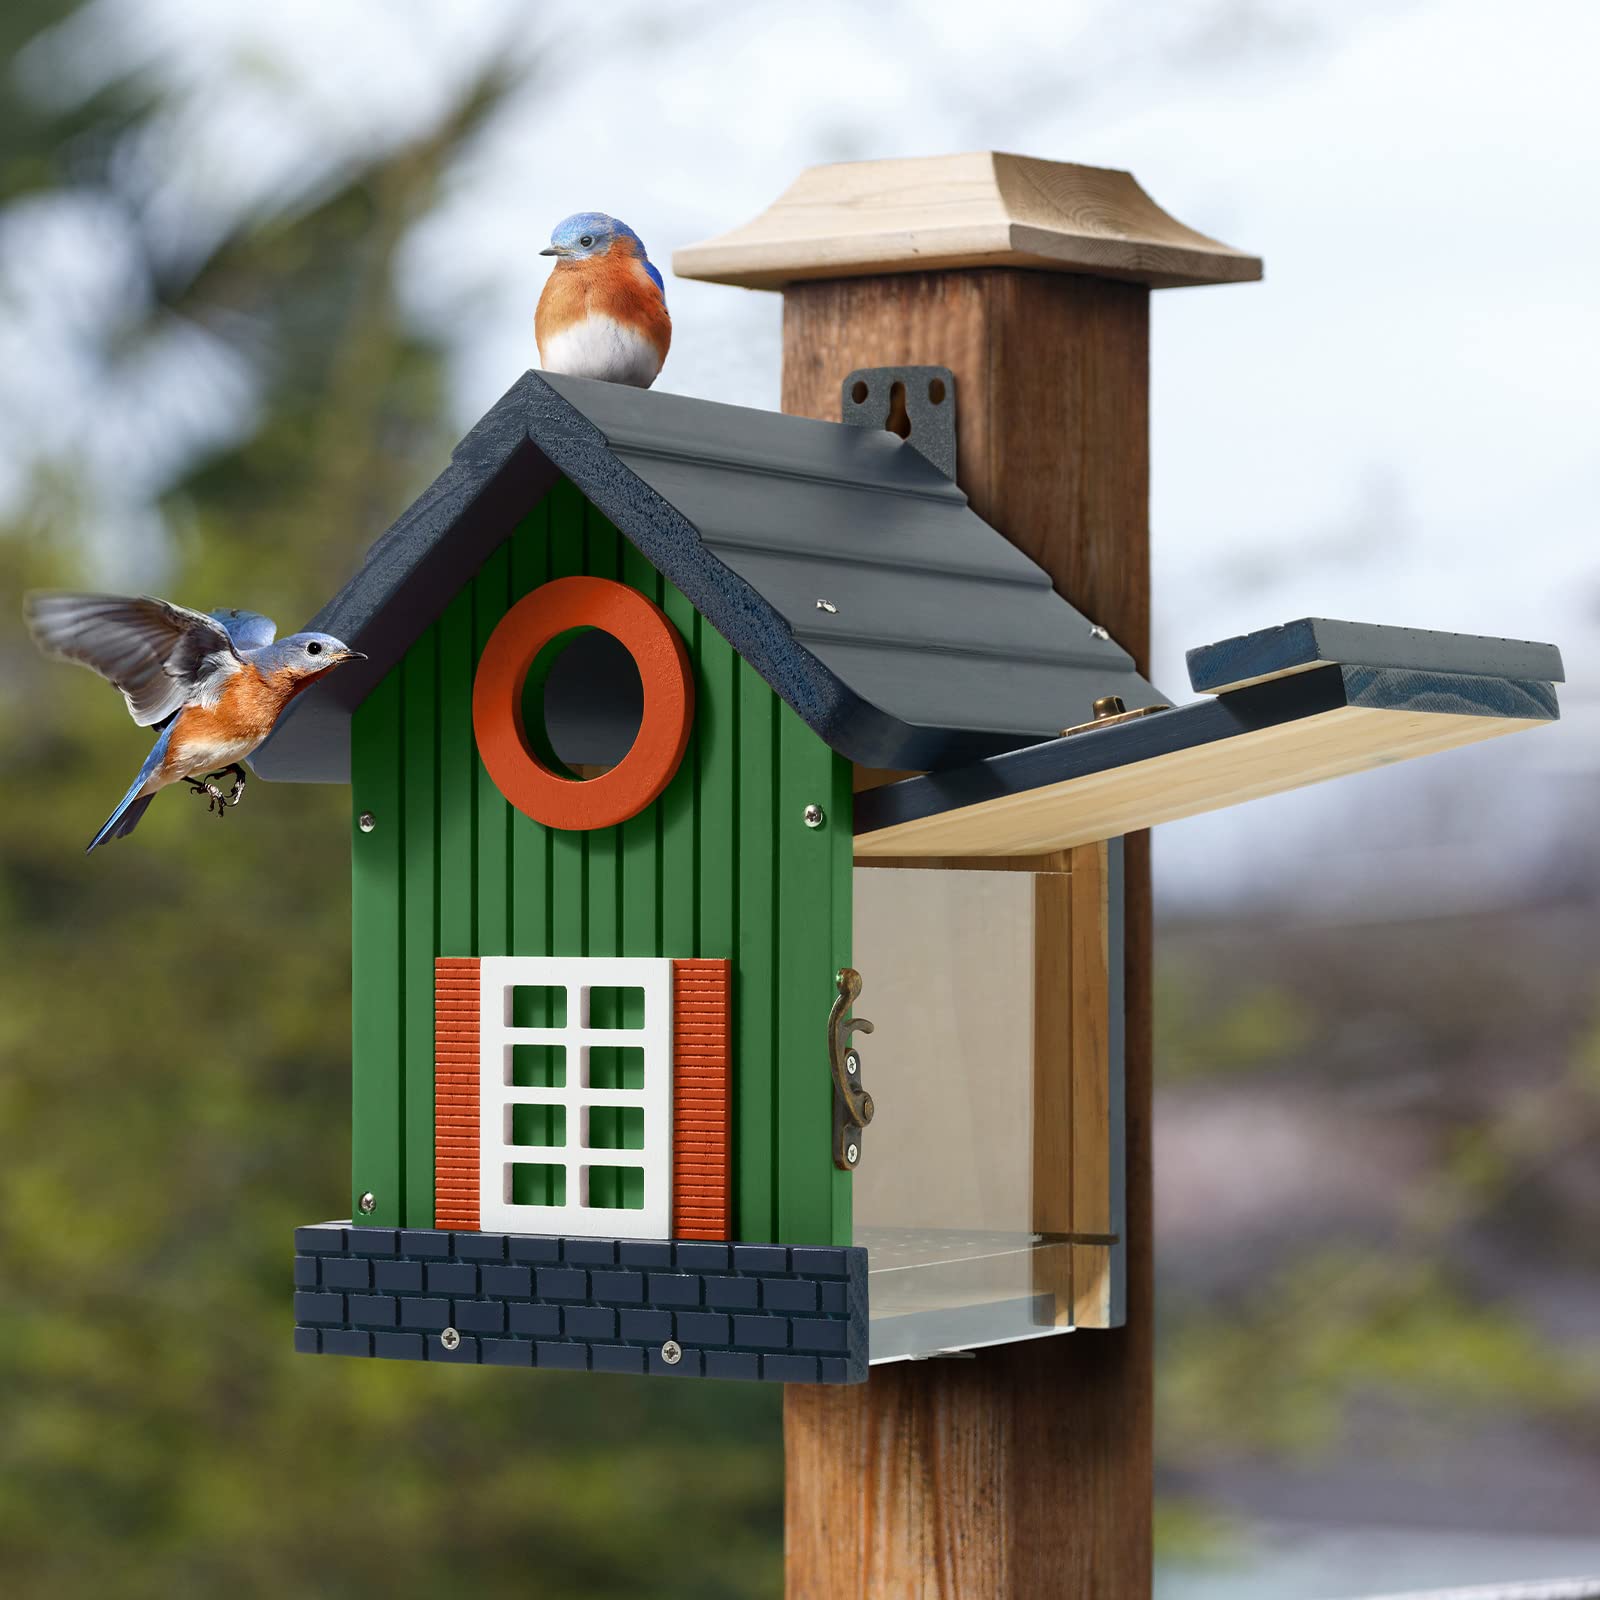 Kingsyard Design Bird House with Predator Guard, Colorful Birdhouse for Bluebird Wren Chickadee, Nesting Box for Wild Bird Watching, Orange